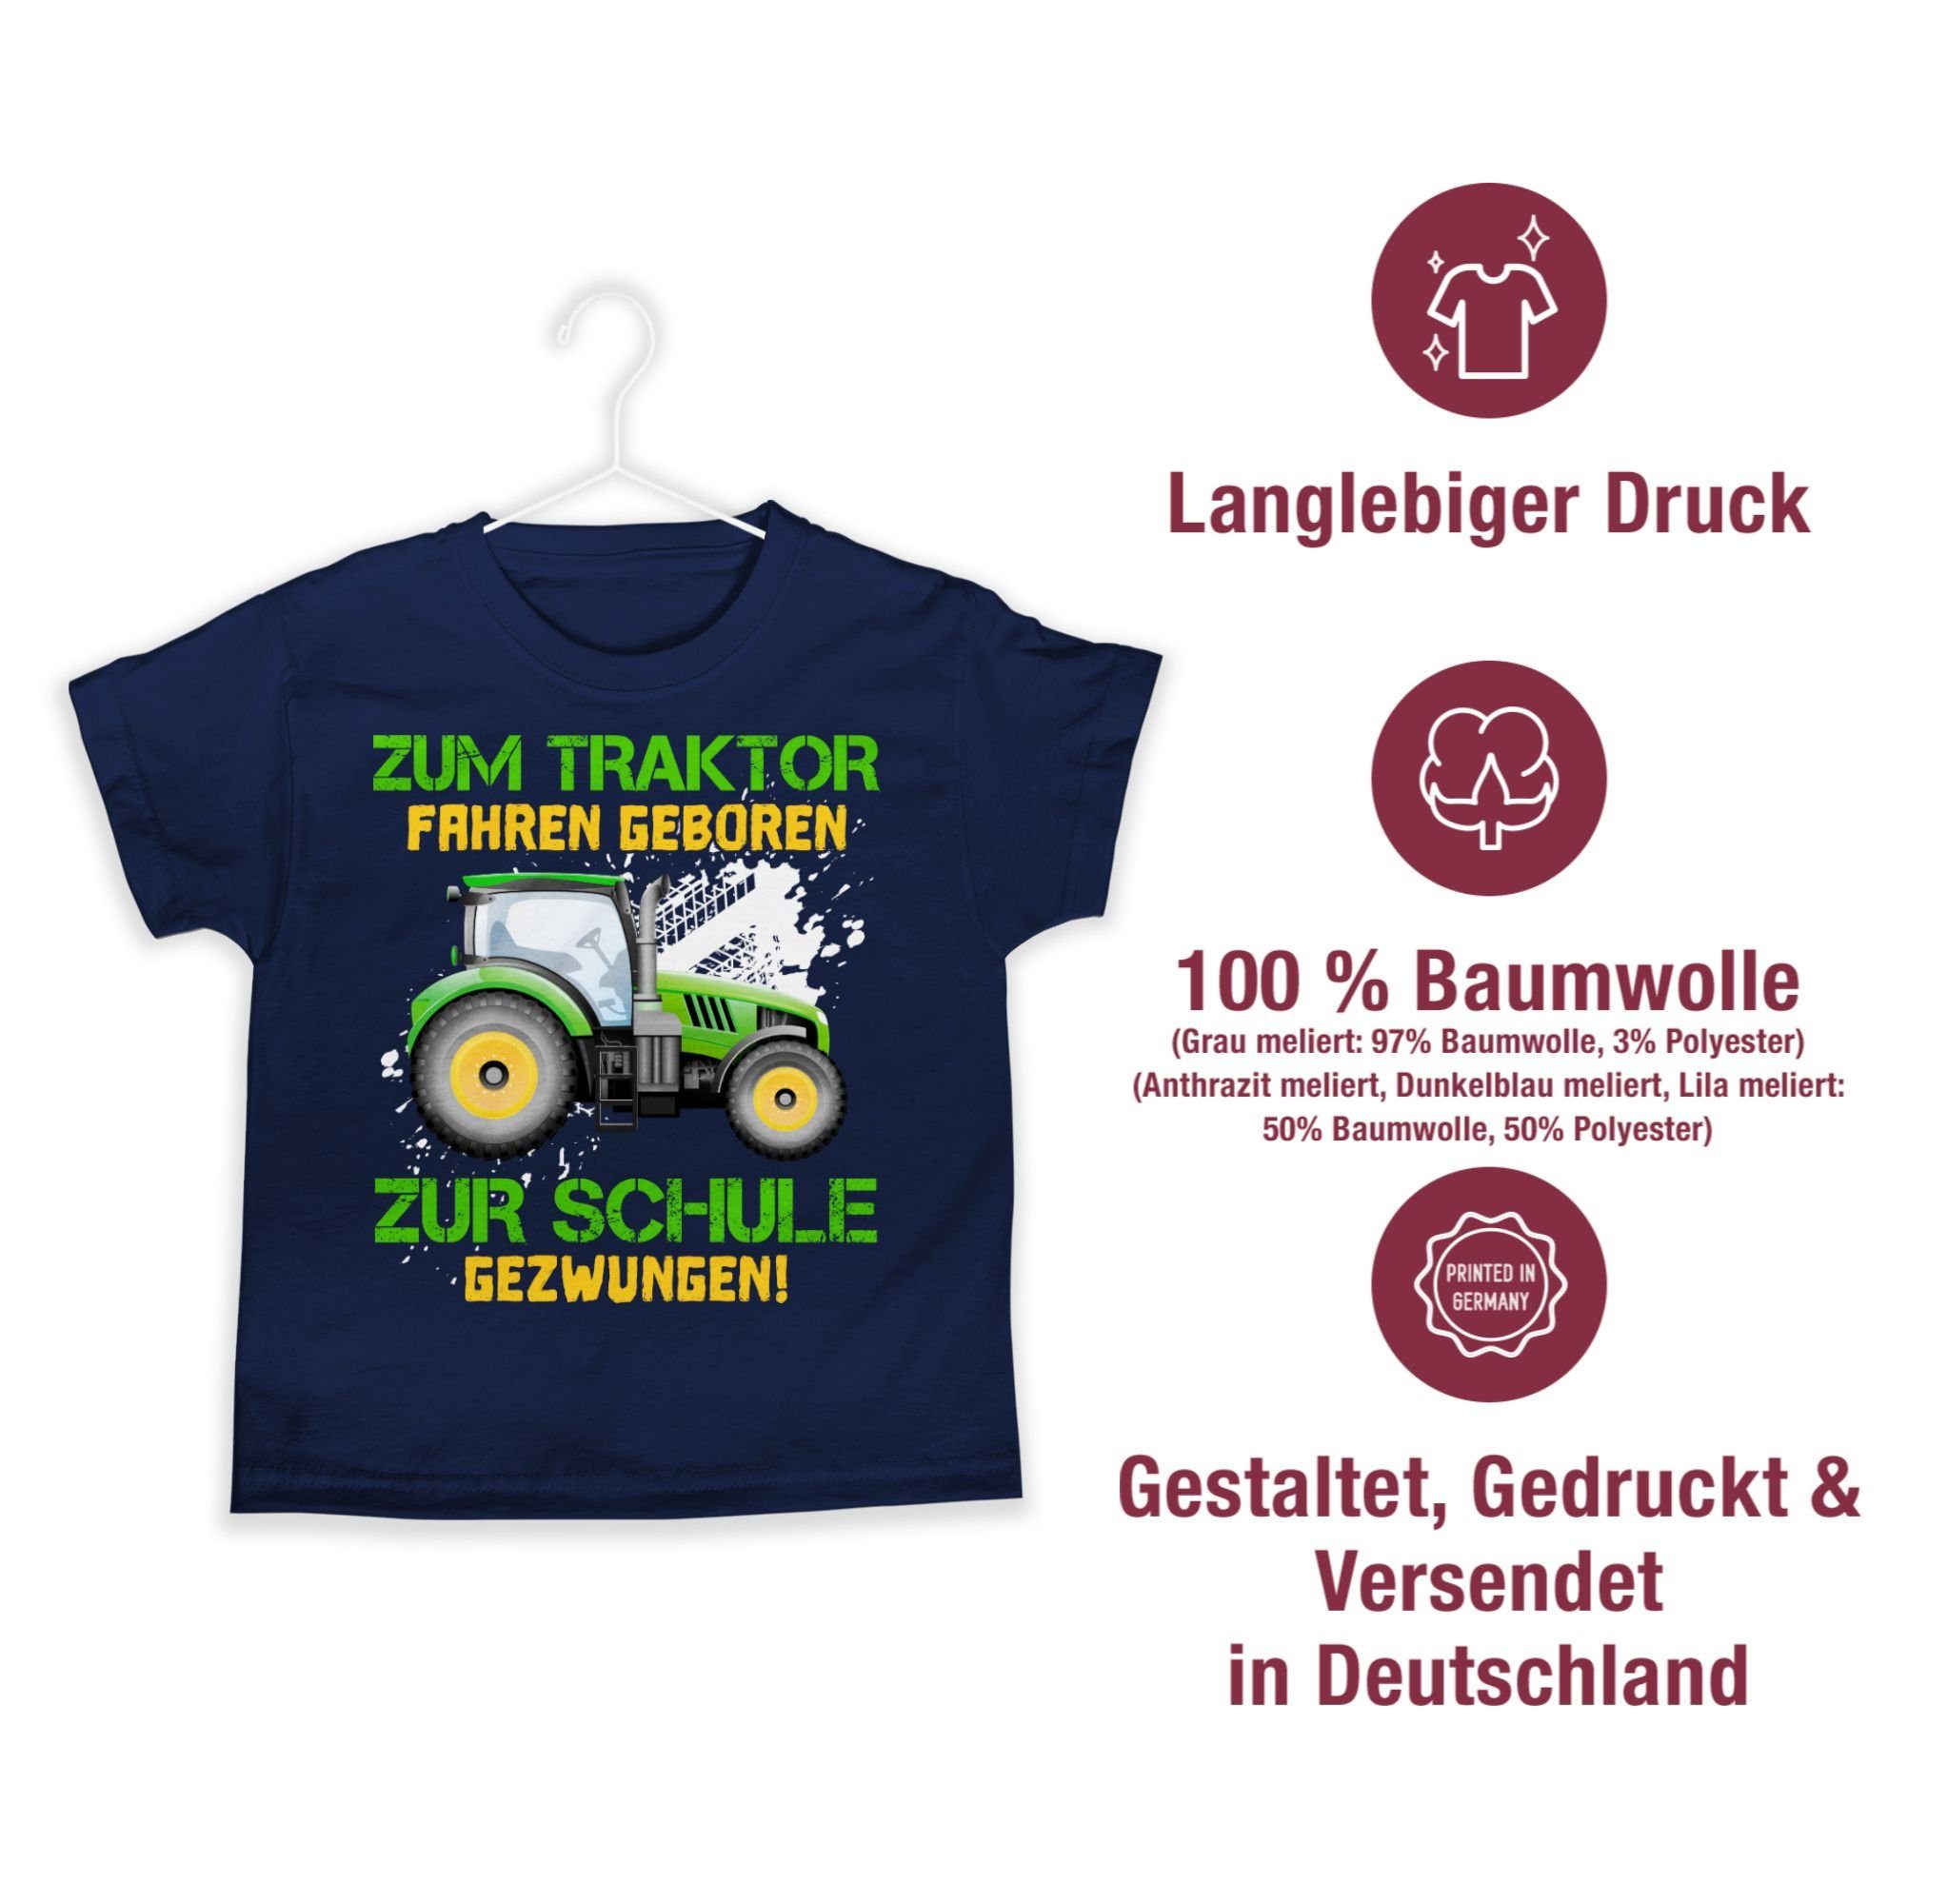 Einschulung Landwirt gezwungen fahren Traktor geboren Schulanfang zur T-Shirt - Shirtracer Kinder Junge Dunkelblau Zum Geschenke Baue Schule 2